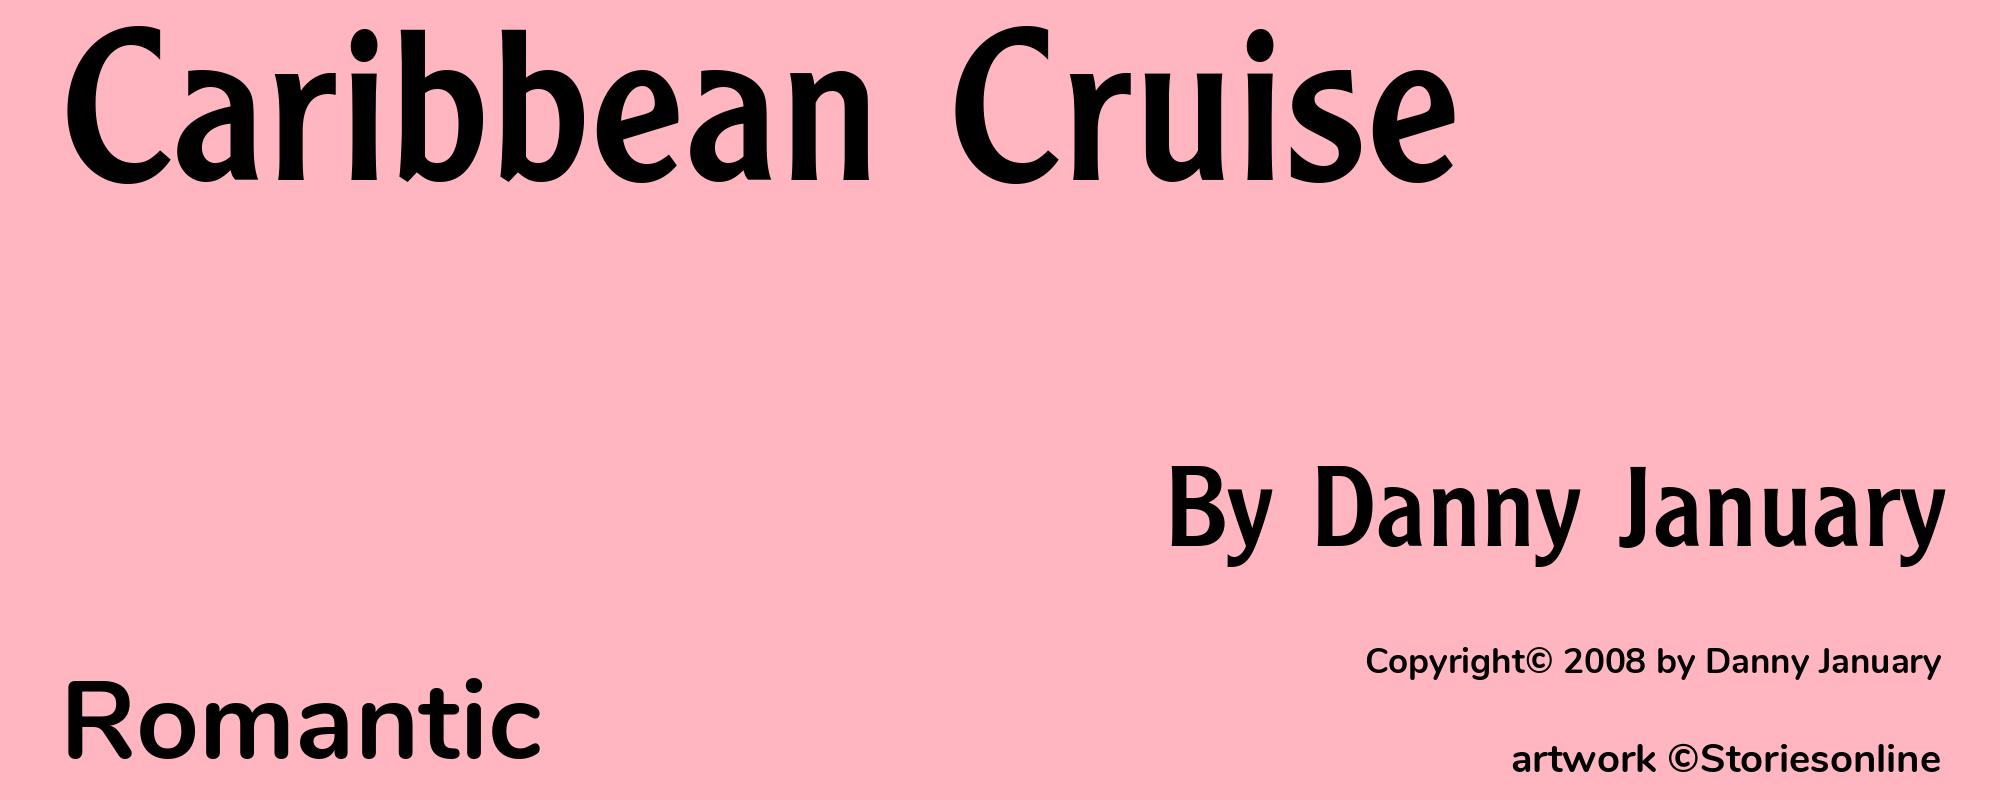 Caribbean Cruise - Cover